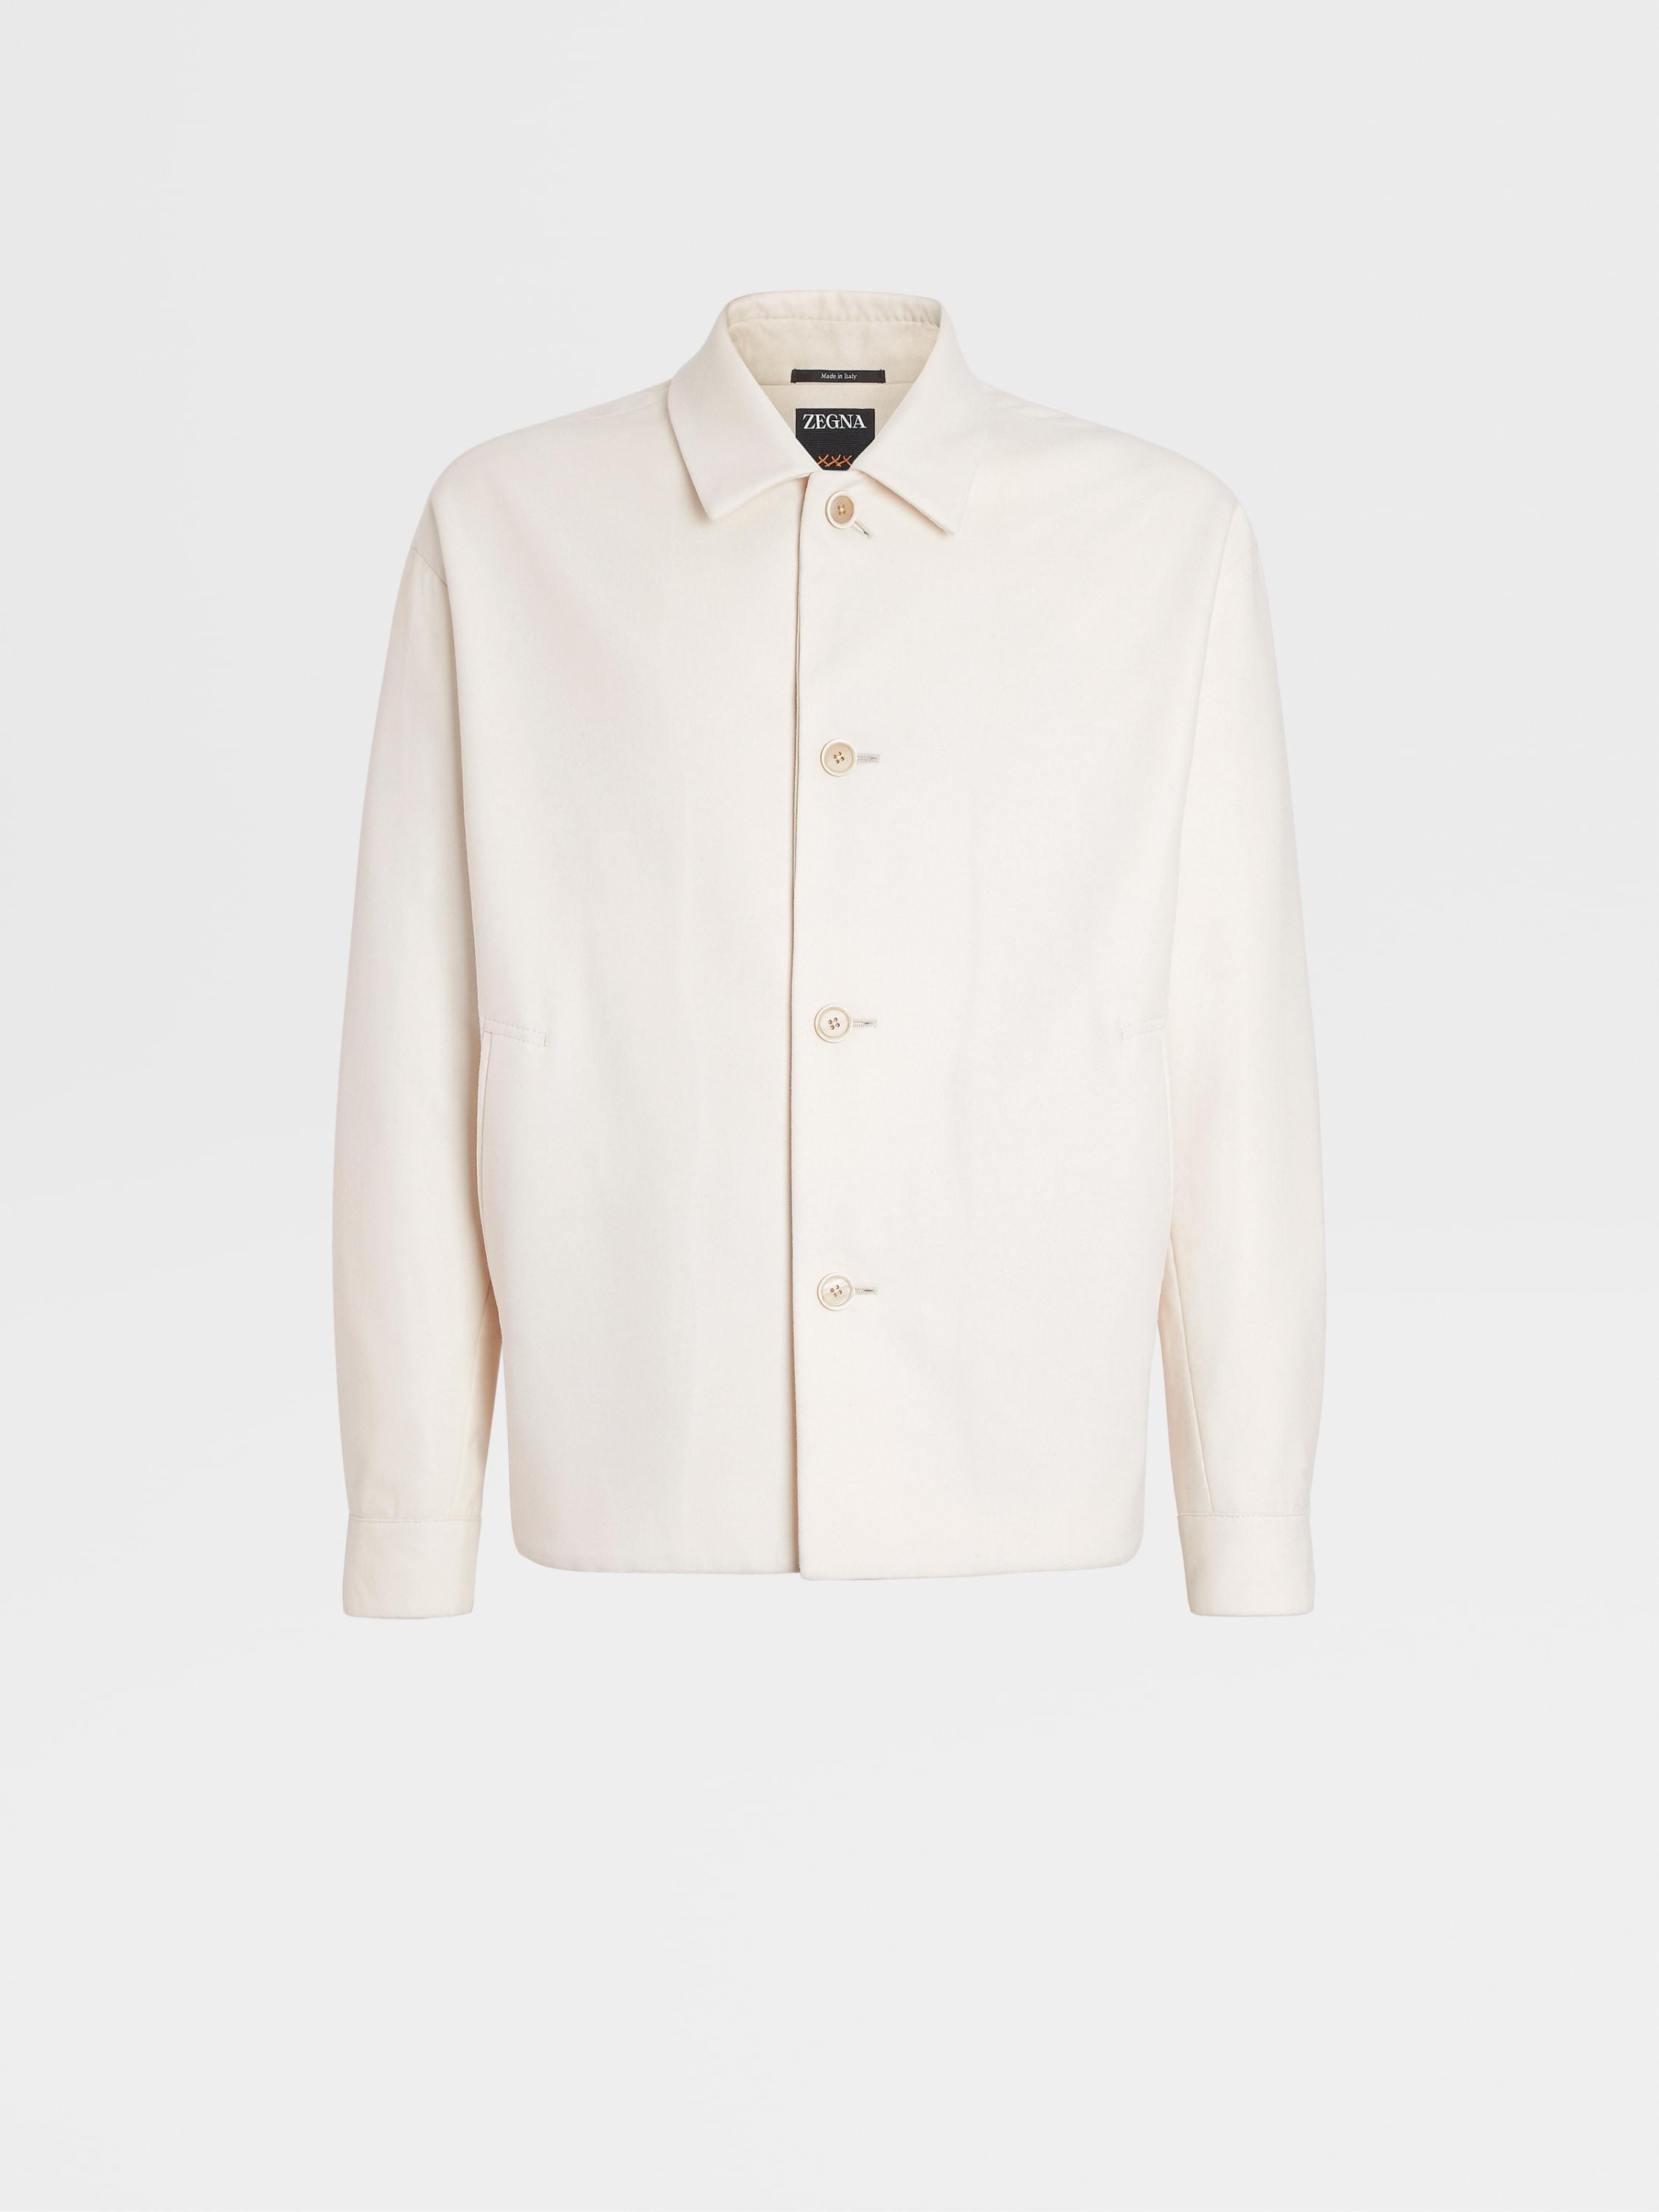 Zegna 14milmil14 Wool Chore Jacket in White for Men | Lyst